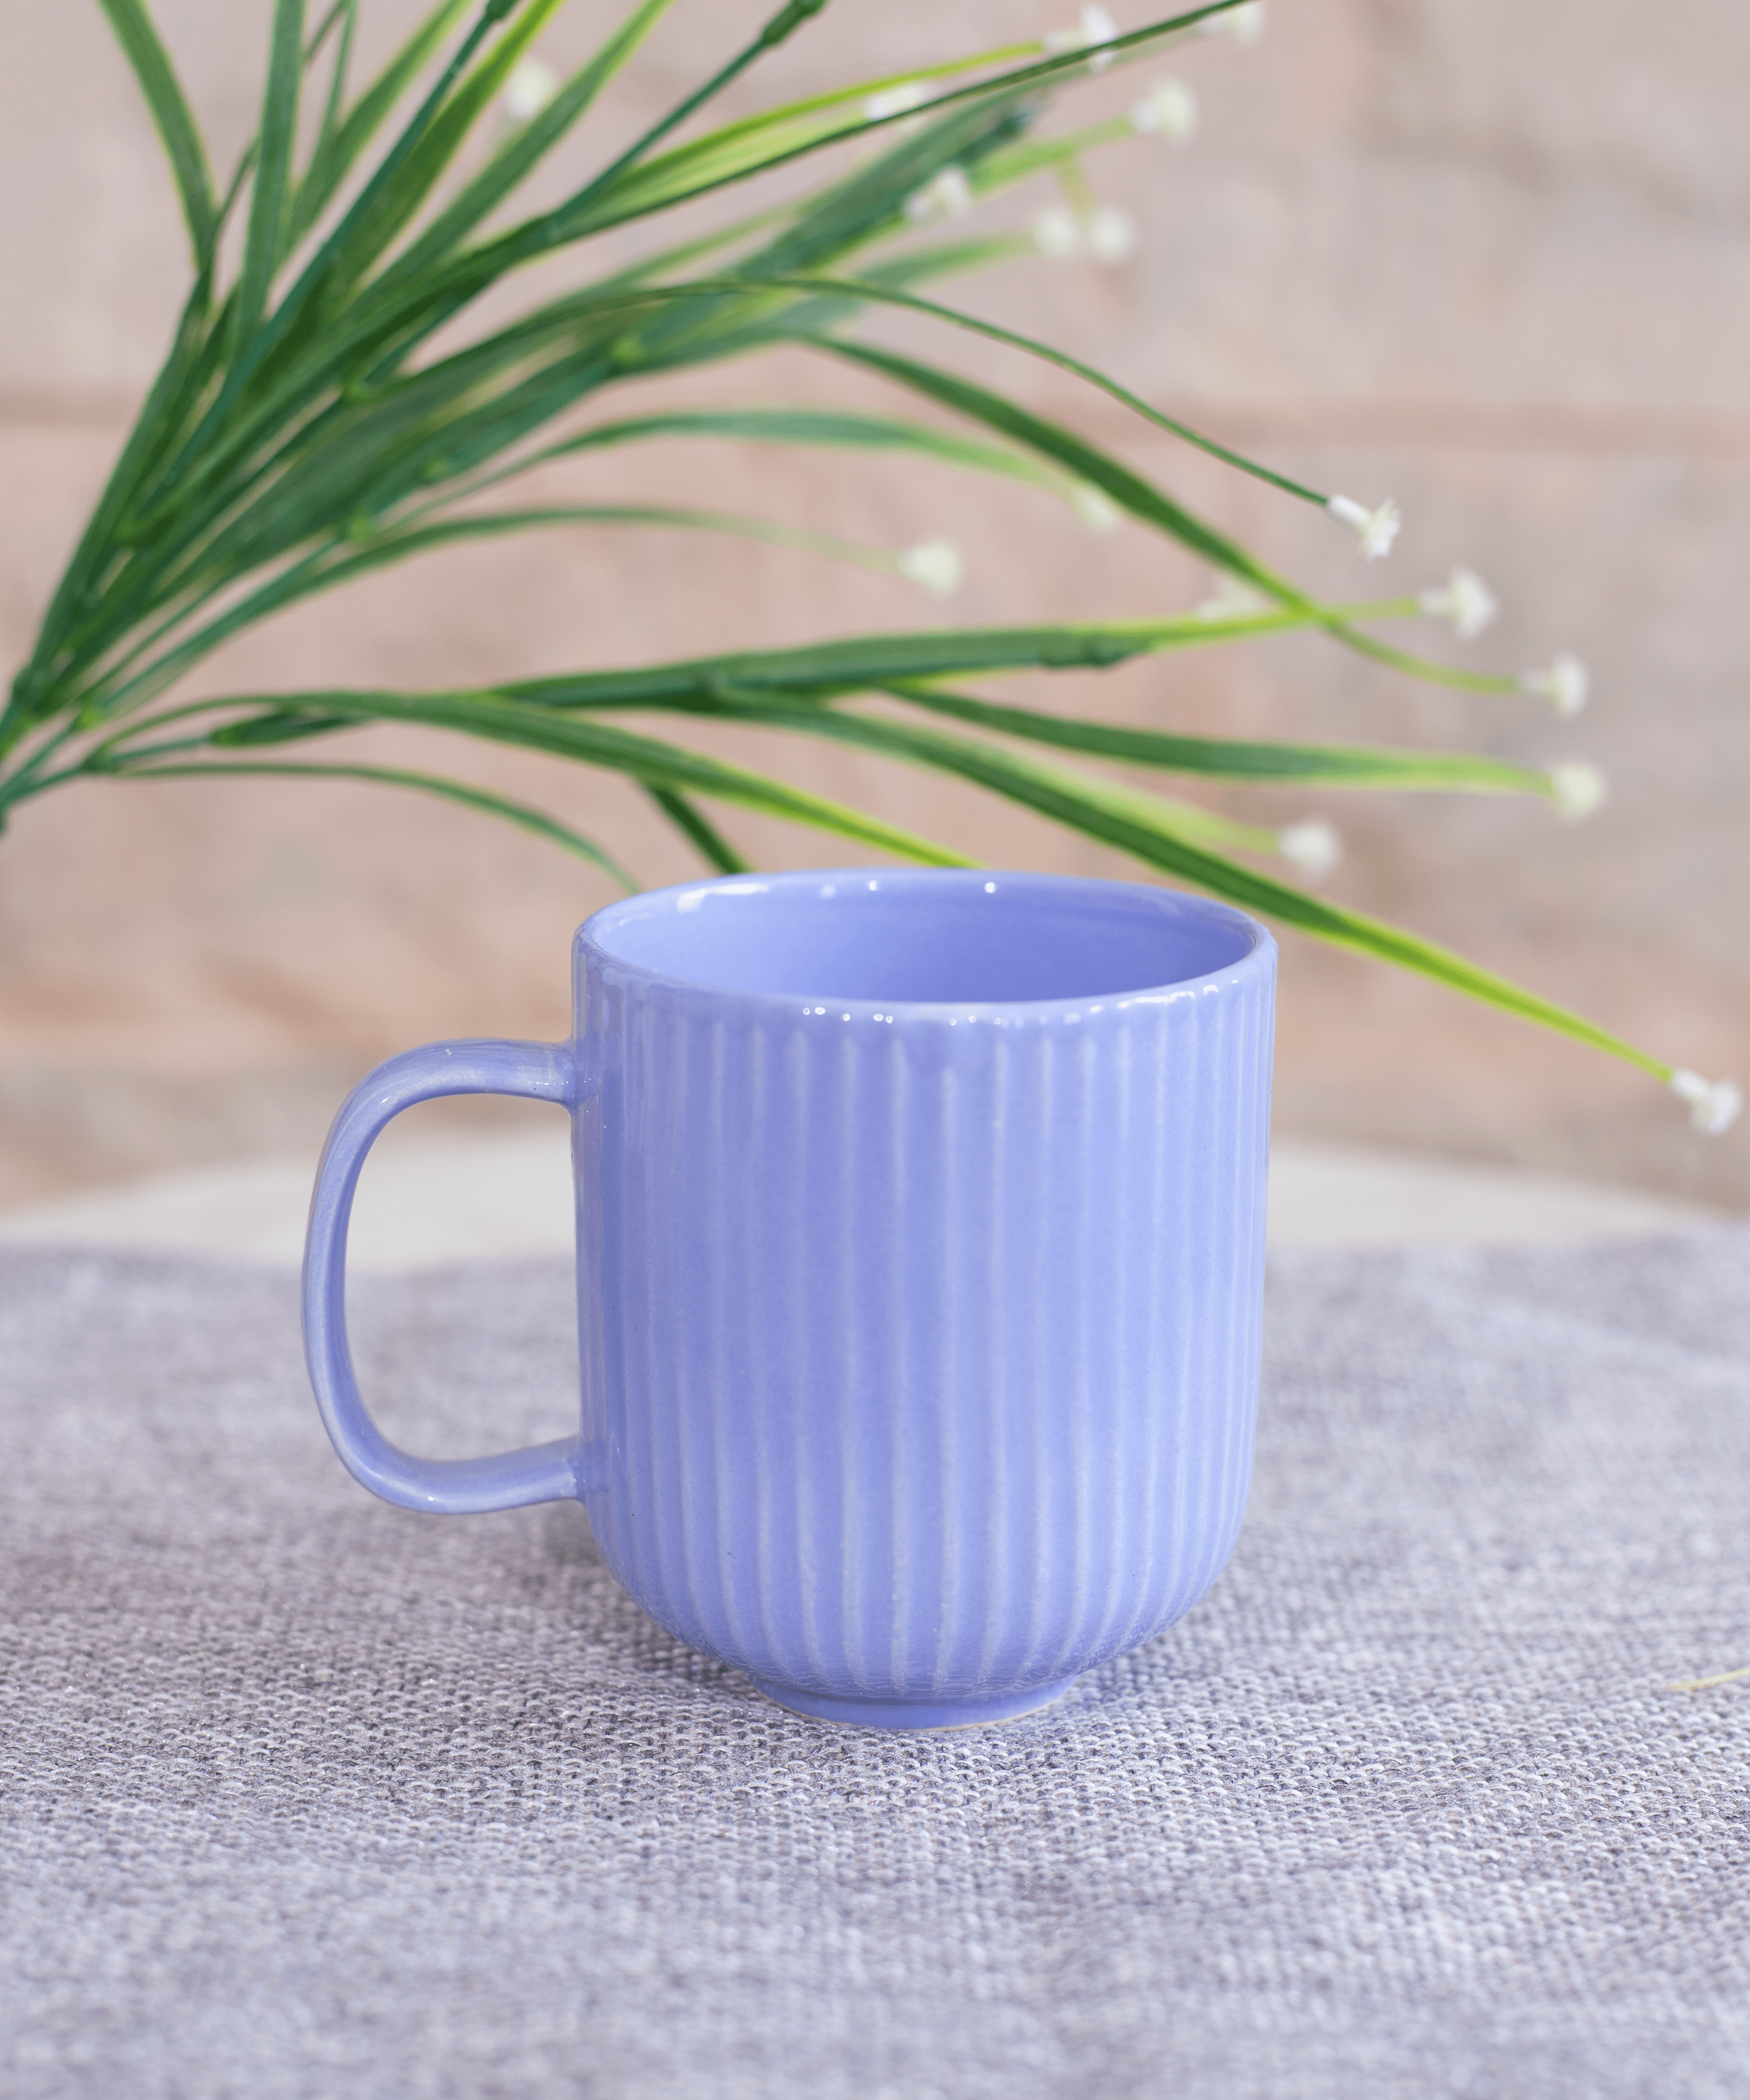 Linear Design Lilac Coffee Mug